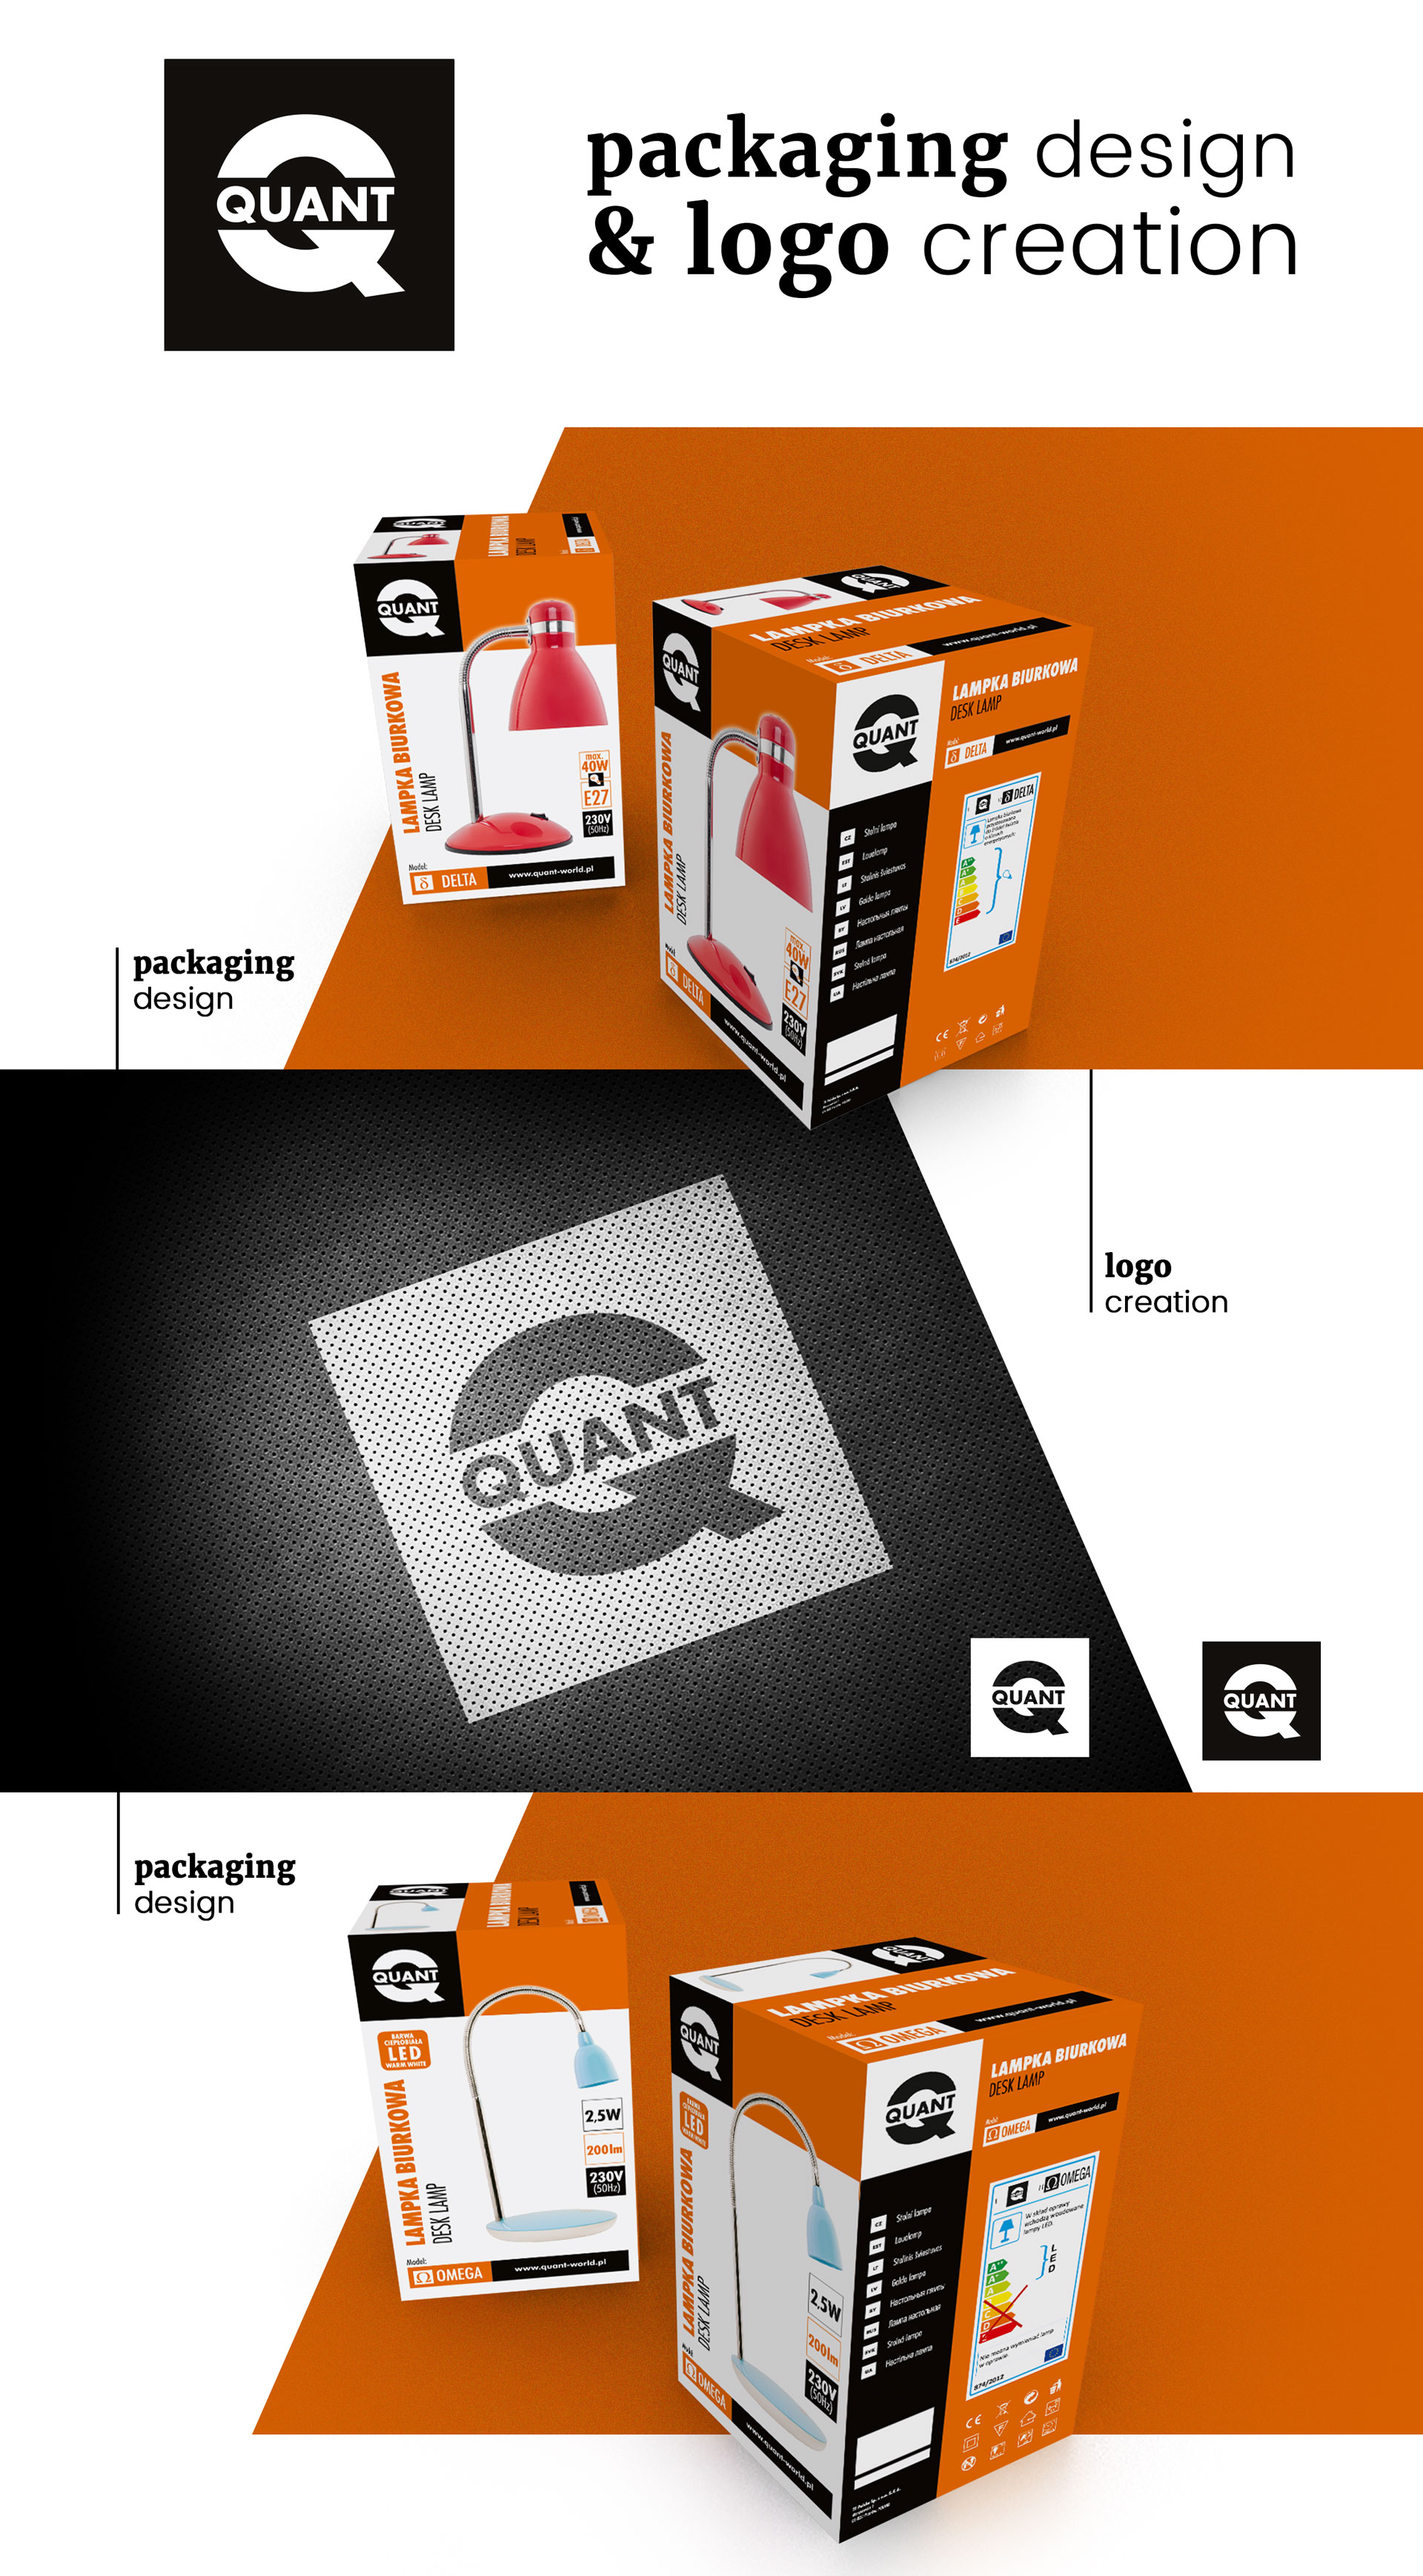 quant_packaging_logo